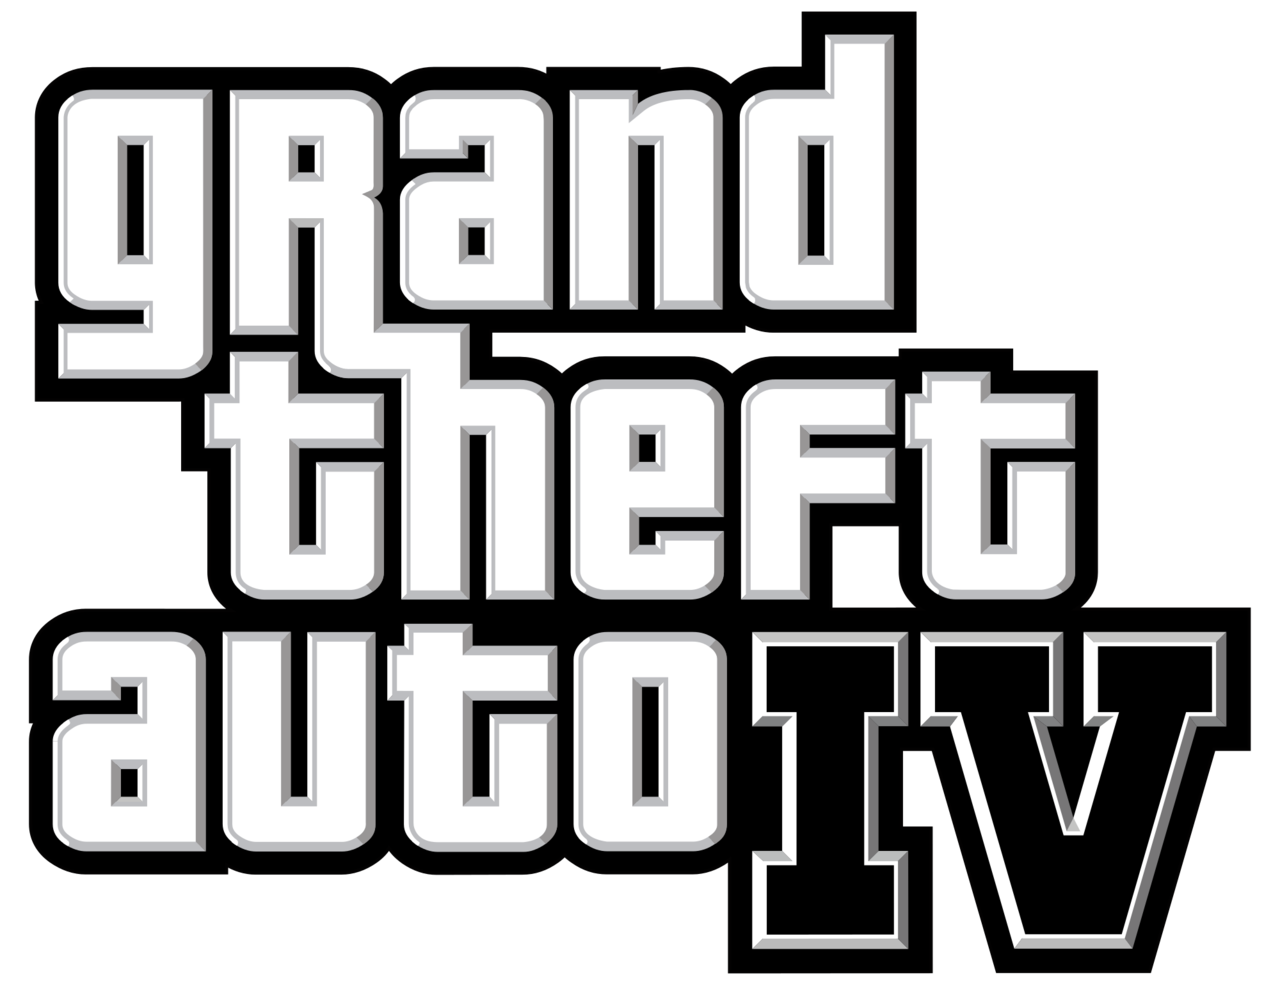 Grand Theft Auto IV Logo